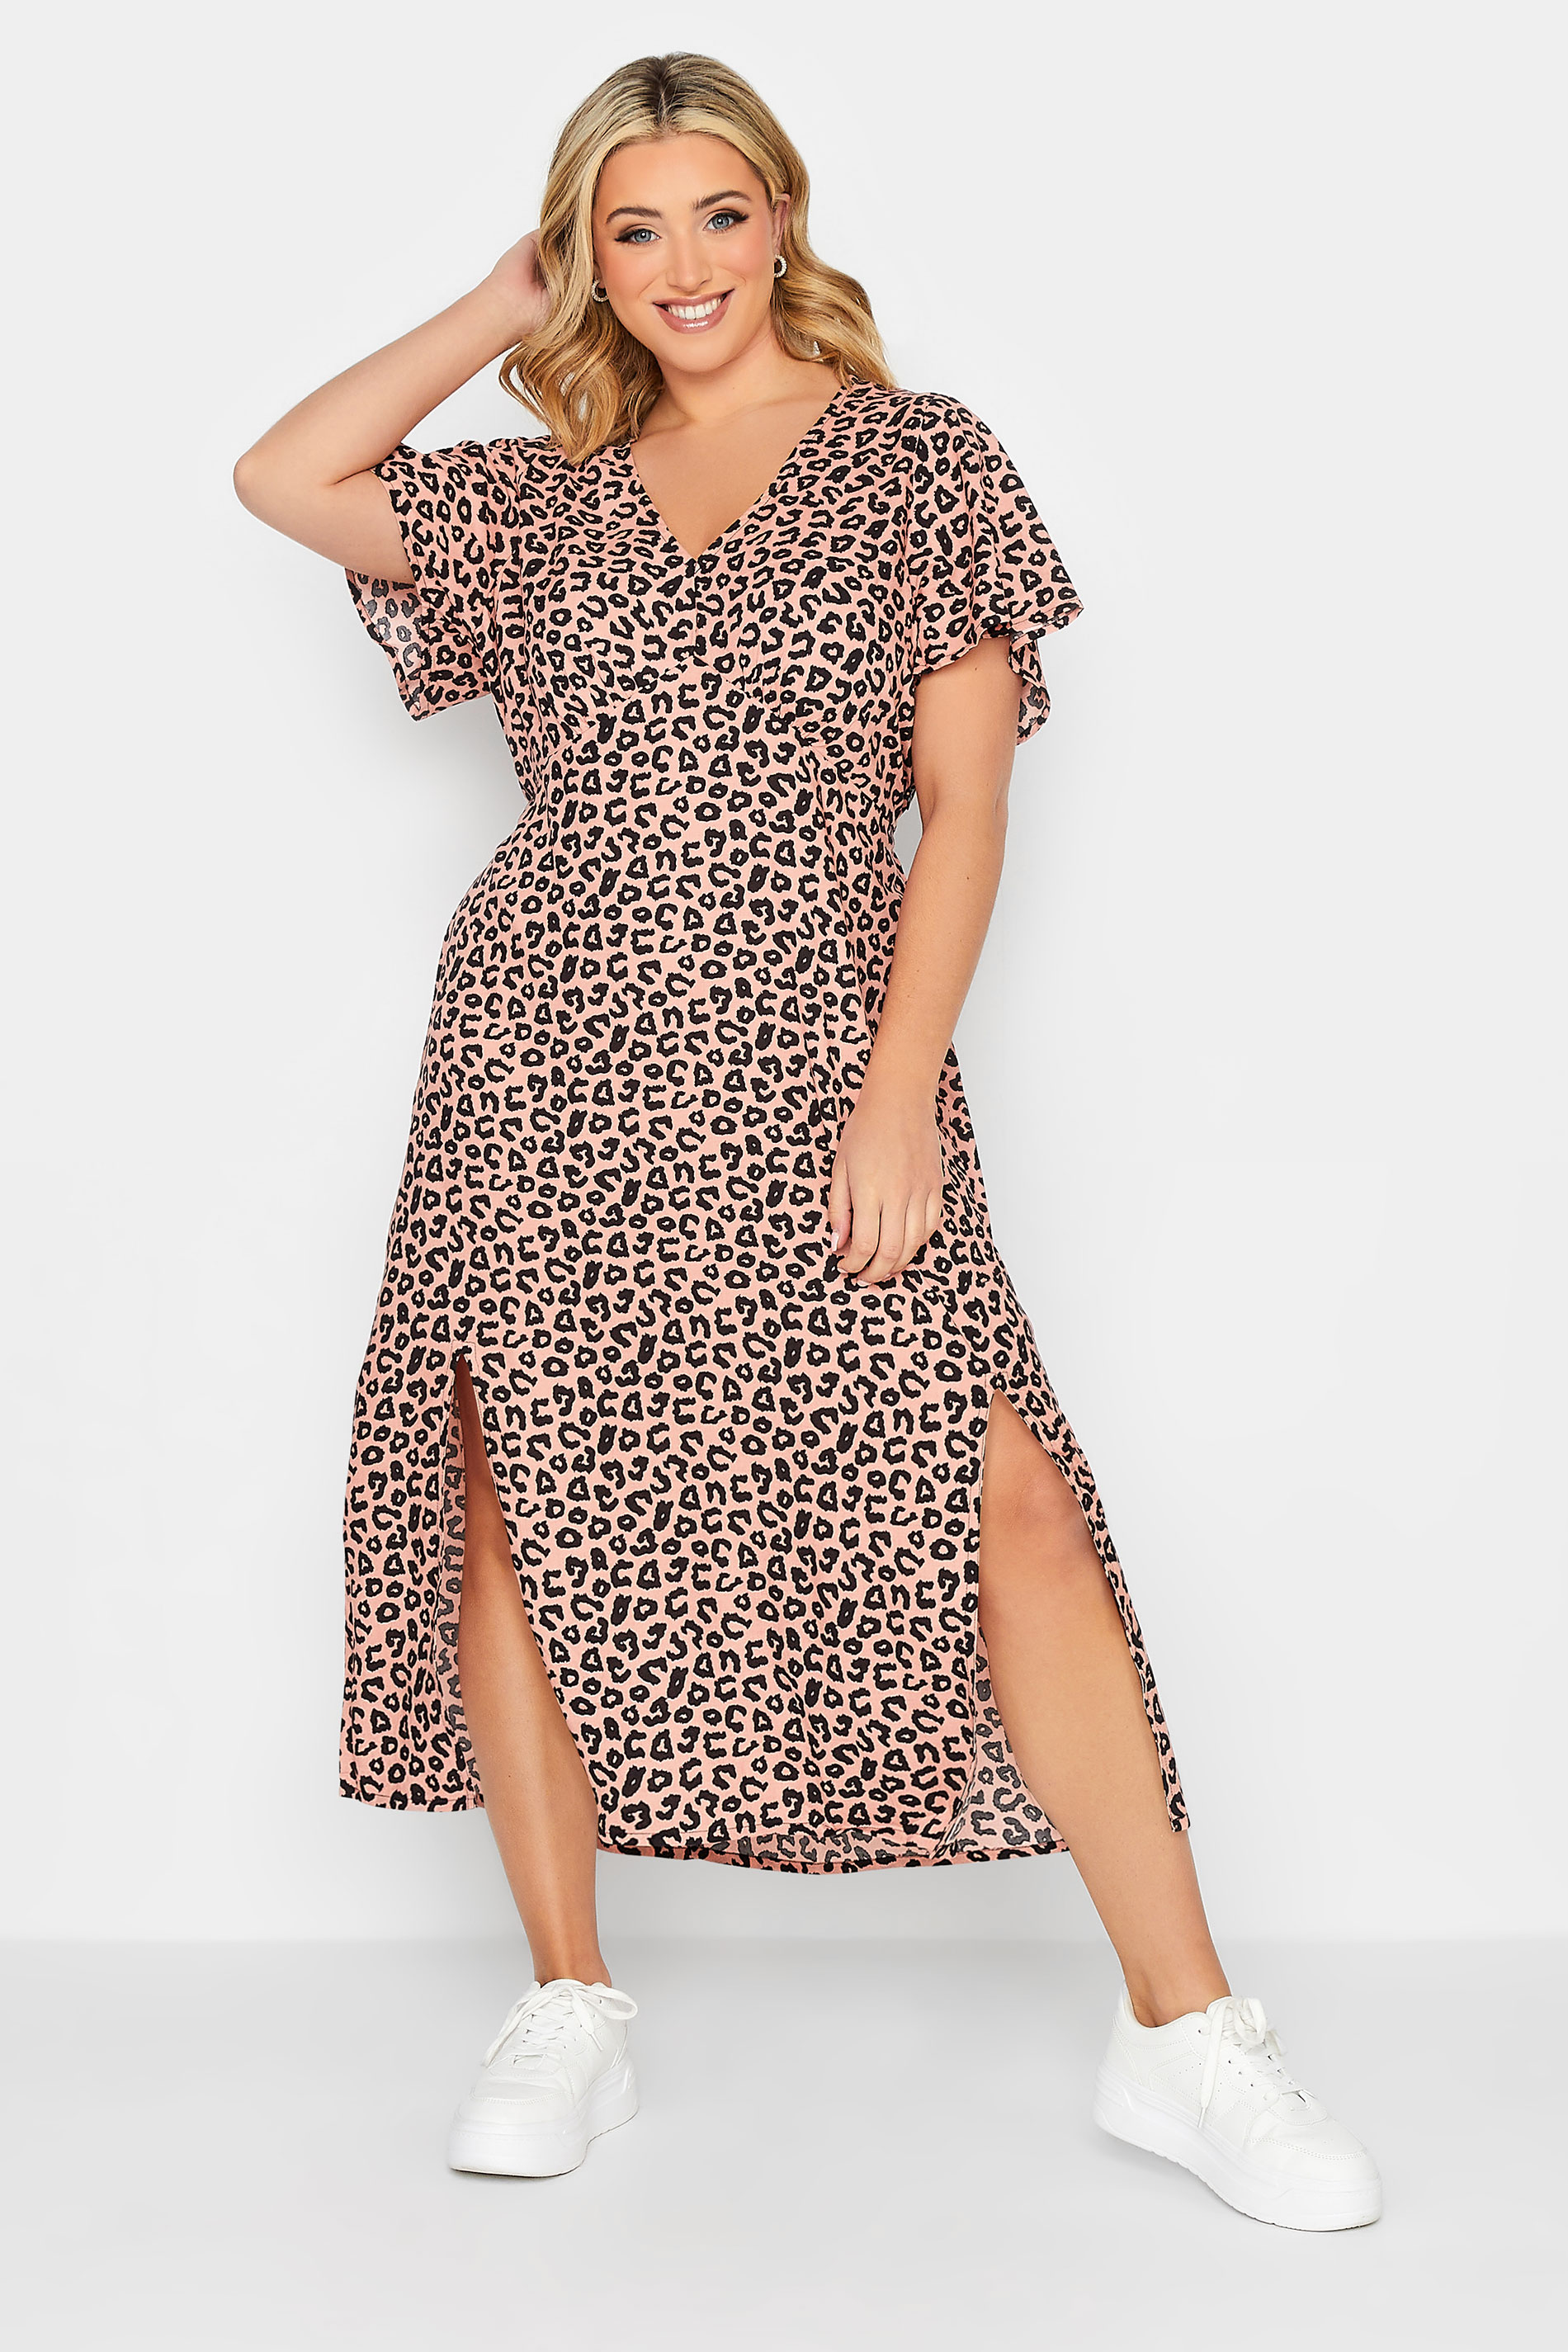 YOURS PETITE Plus Size Pink Leopard Print Midi Tea Dress | Yours Clothing 1